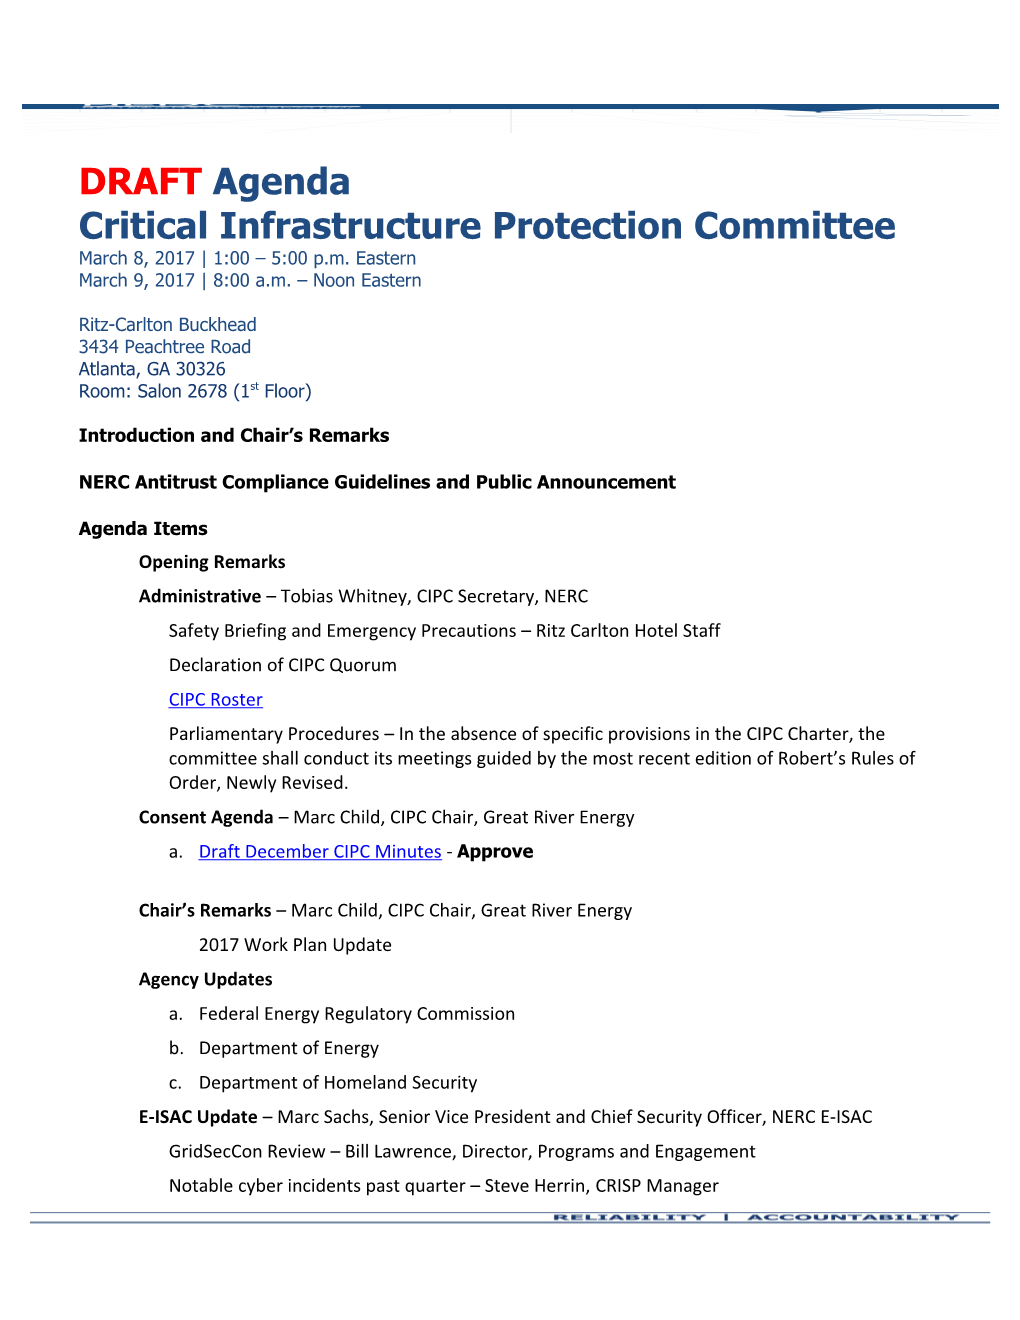 Draft CIPC Meeting Agenda - March 8-9 (Atlanta, GA)